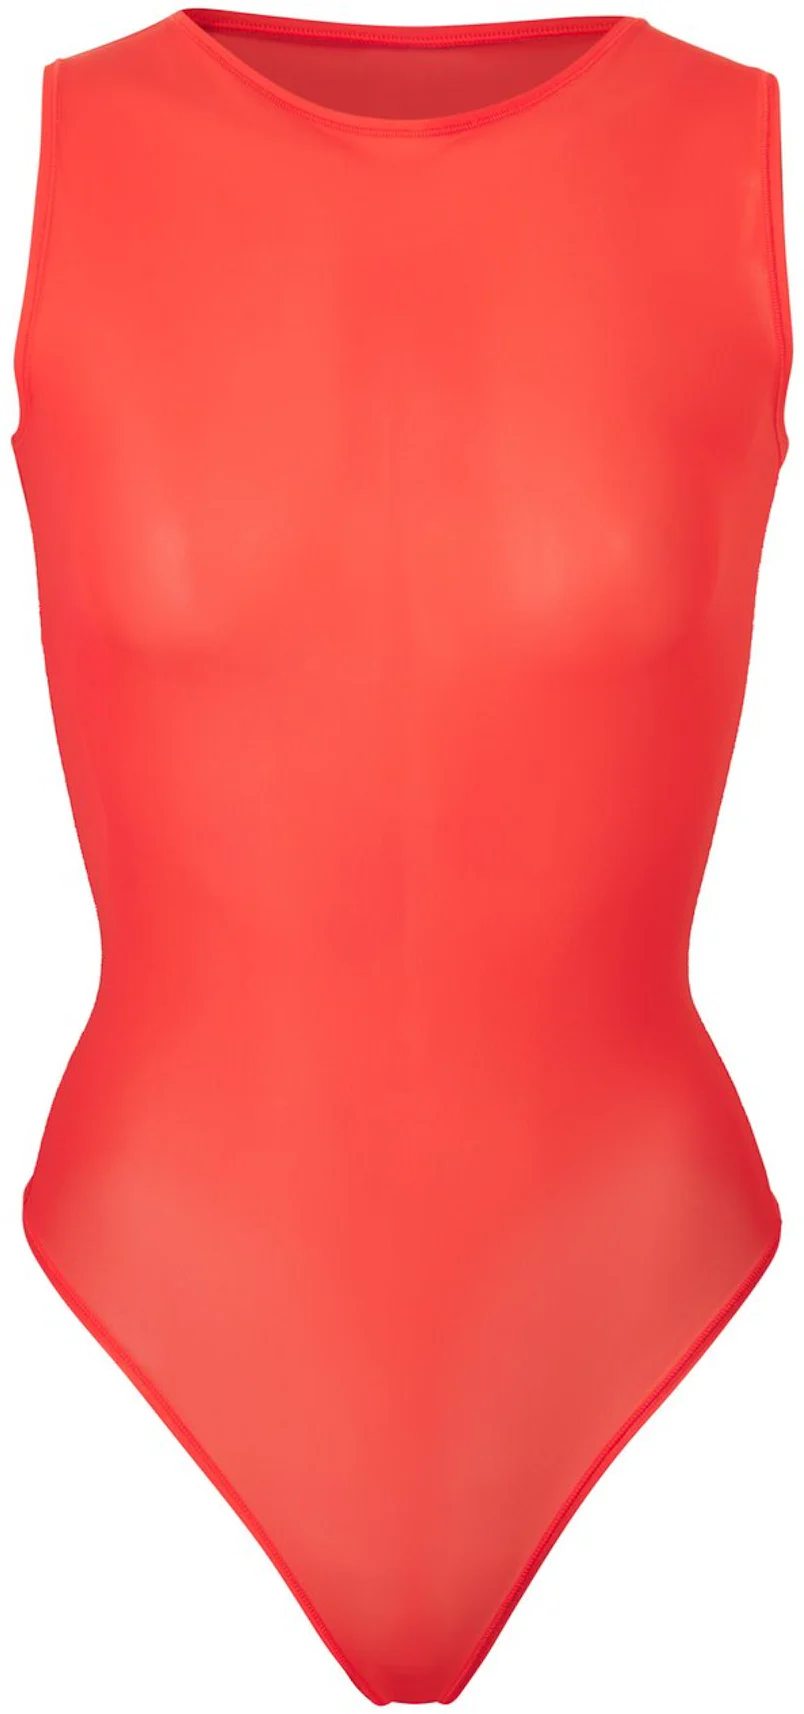 SKIMS Poppy Red Orange Long Sleeve Scoop Neck Bodysuit - 2X